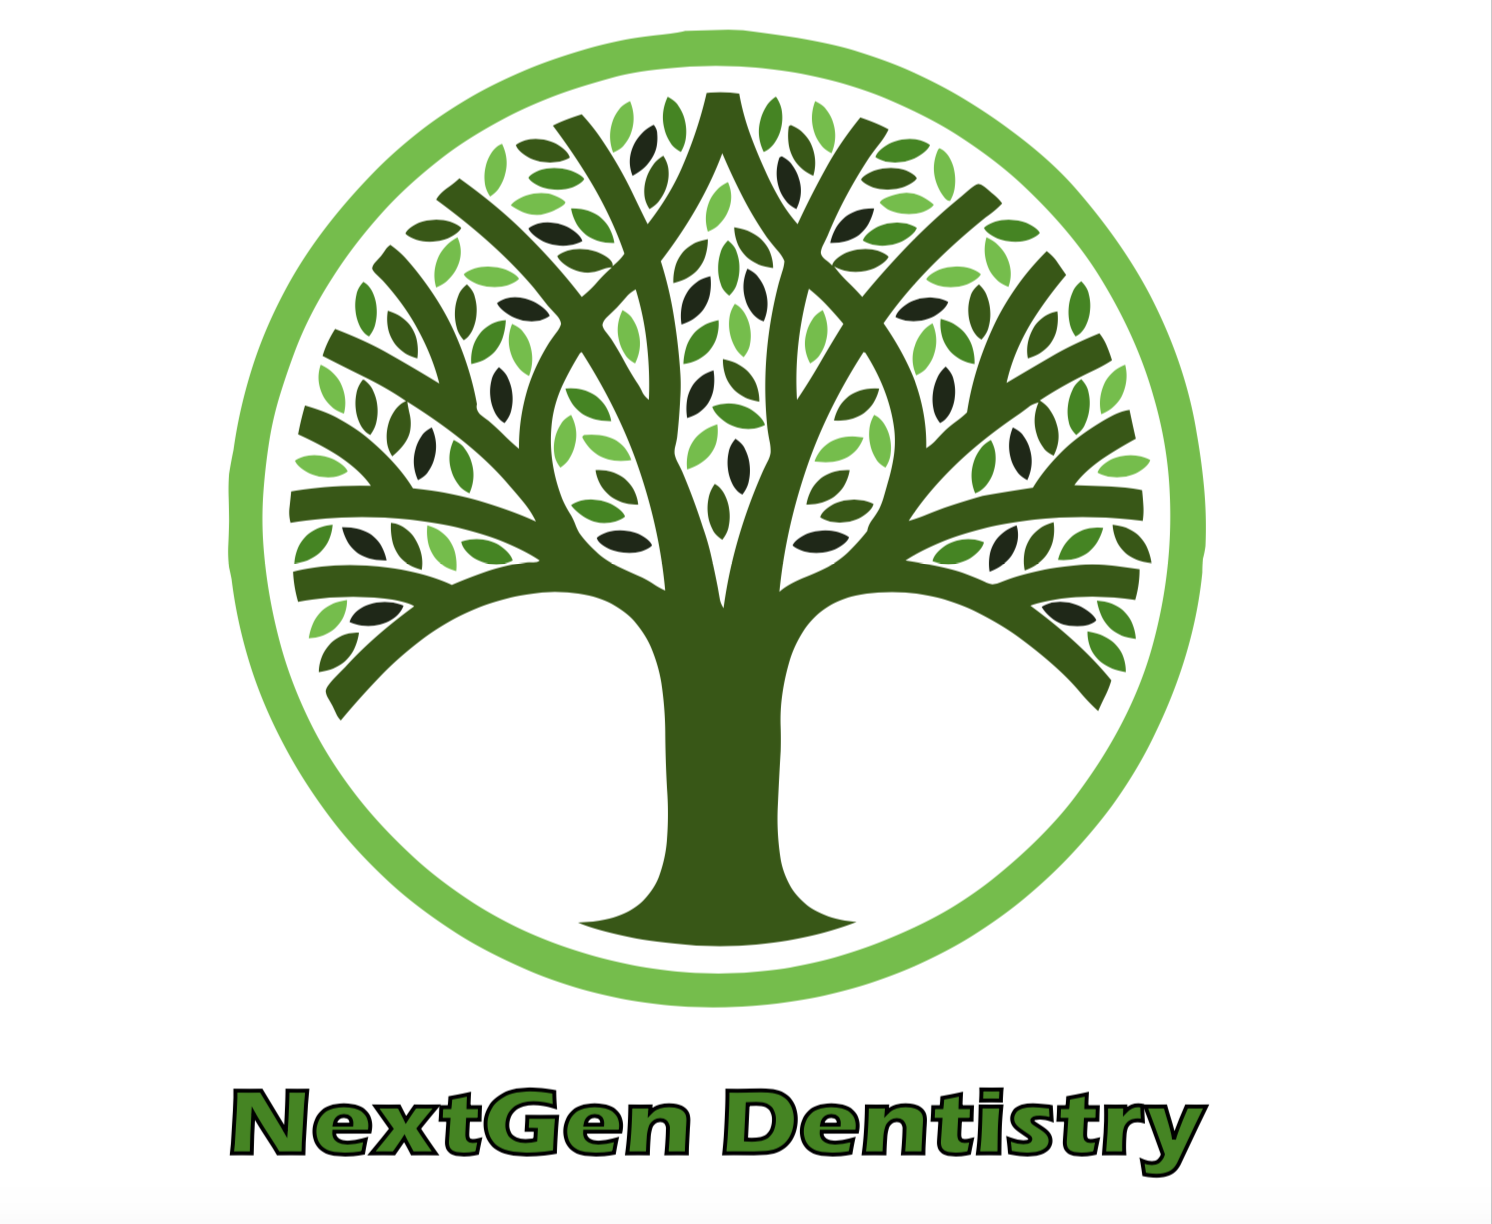 The logo or business face of "NextGen Dentistry"